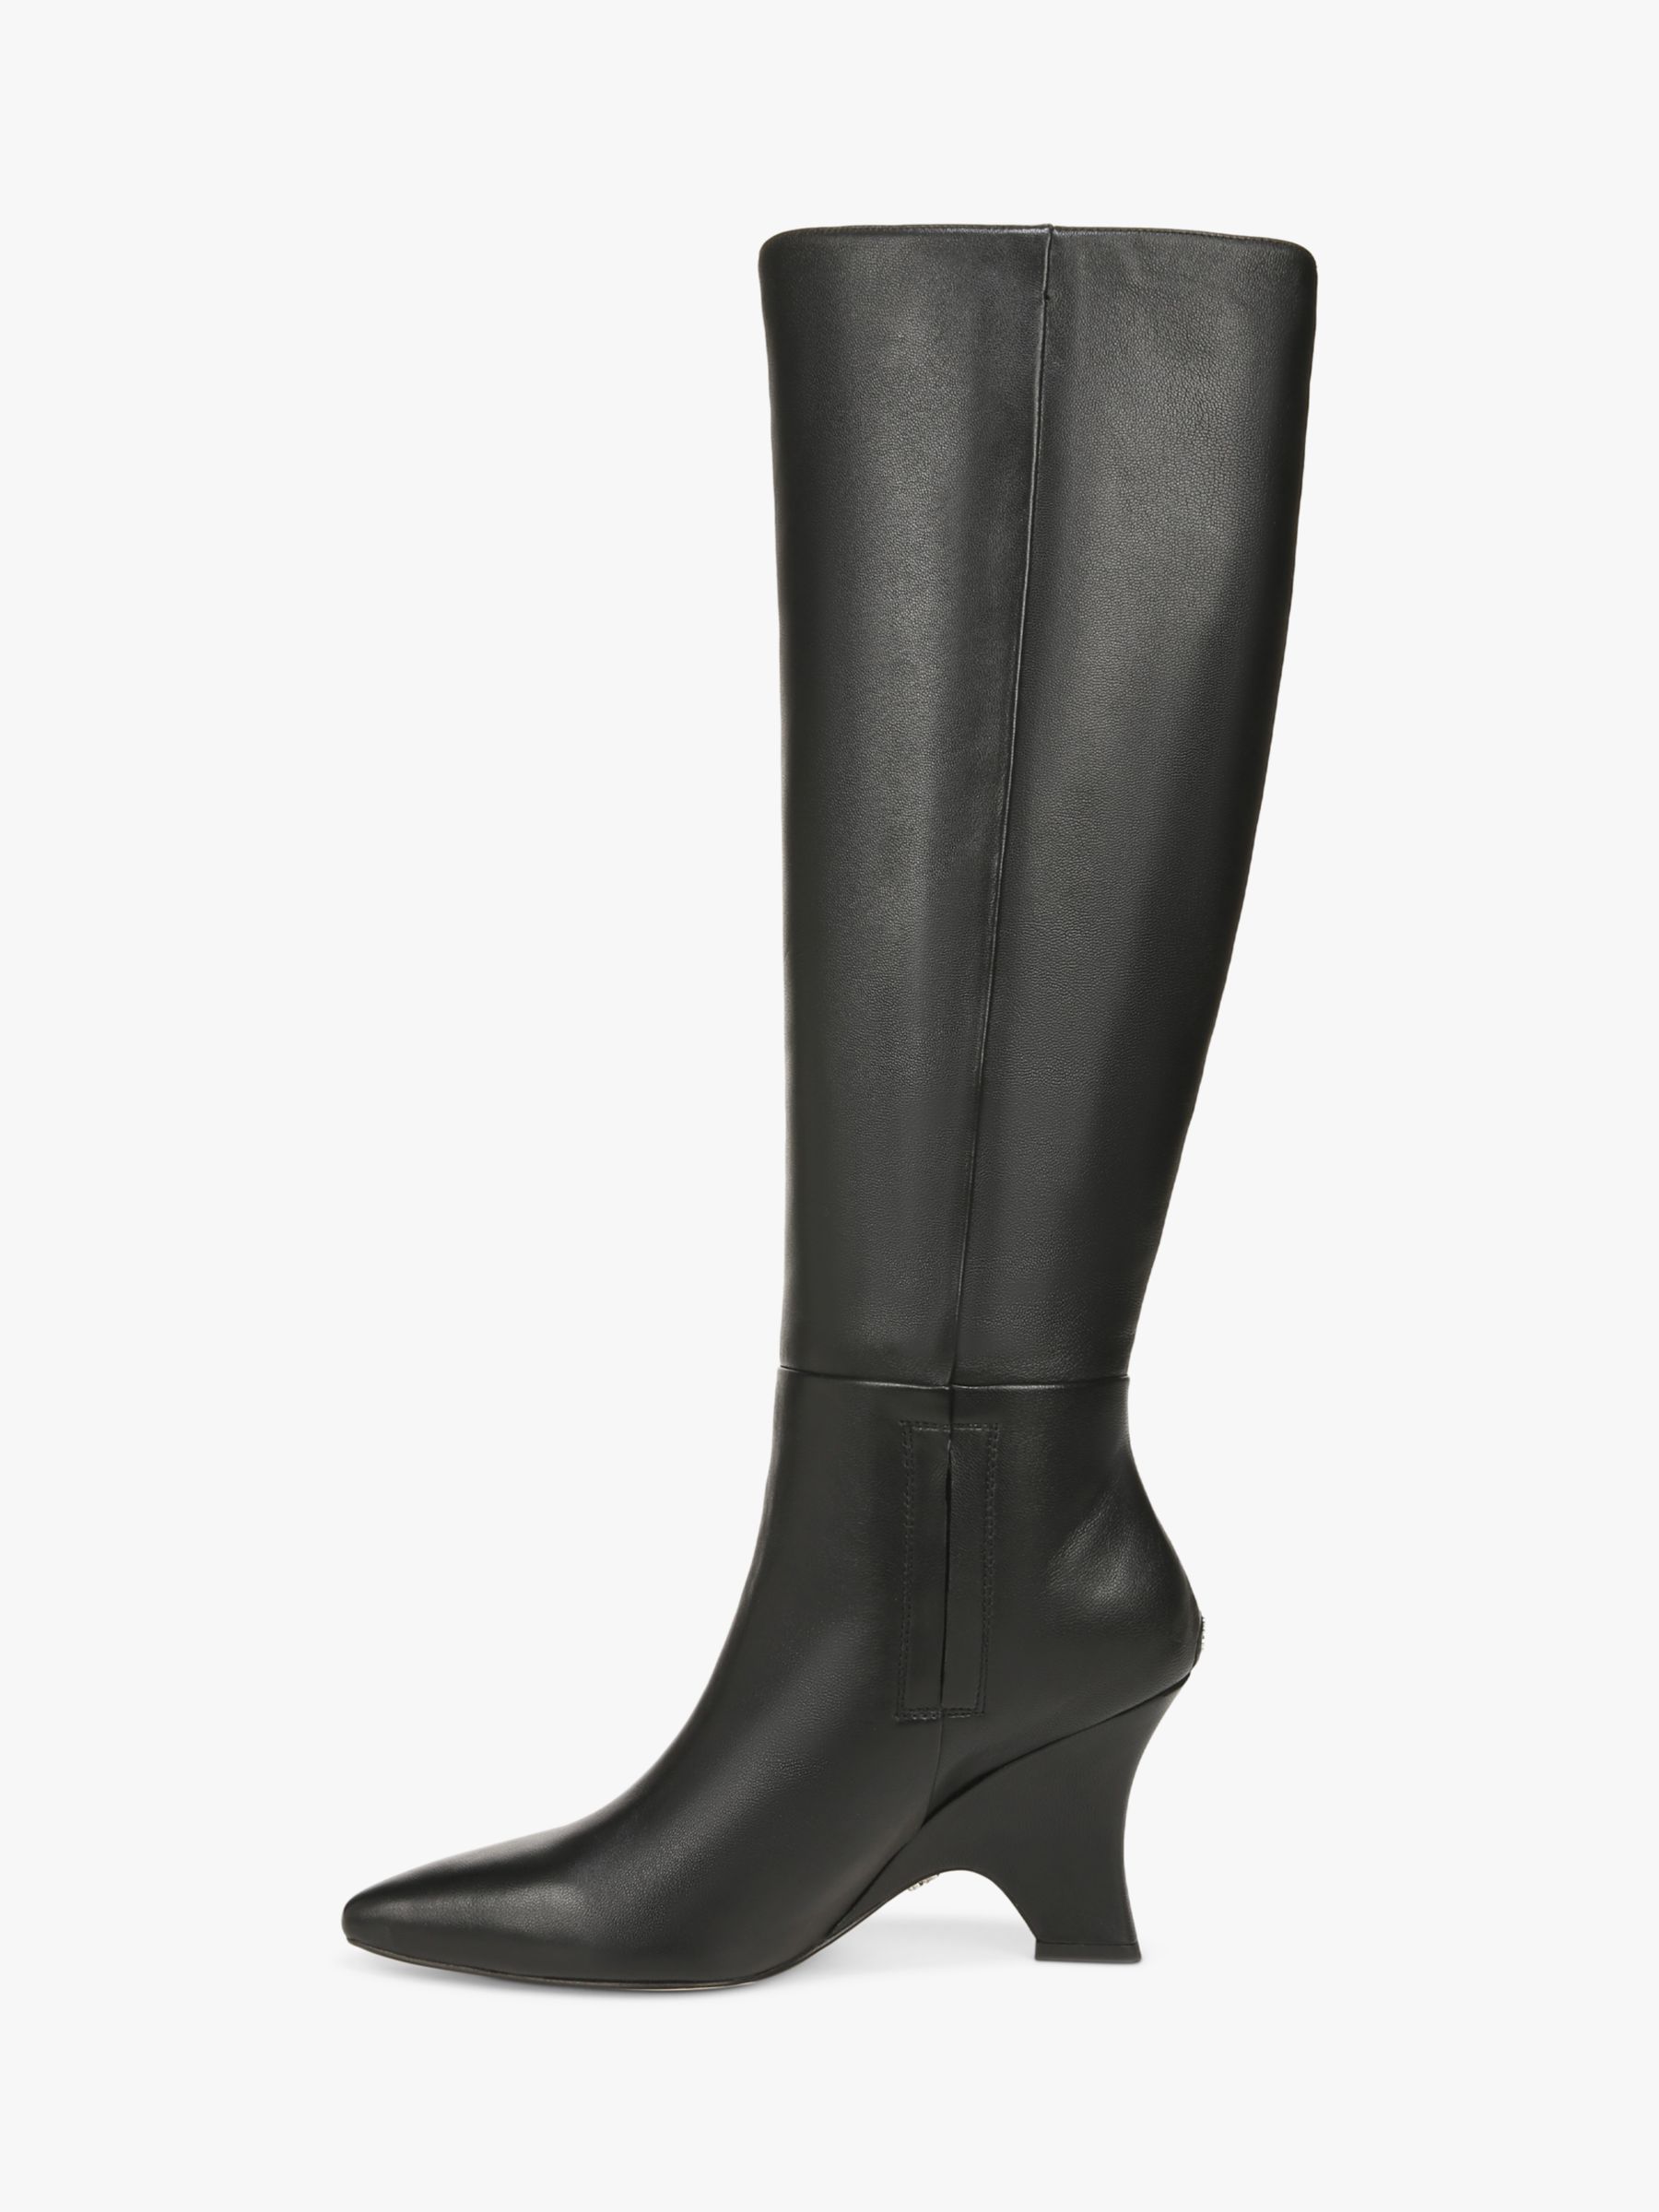 Sam Edelman Vance Knee High Leather Boots, Black at John Lewis & Partners